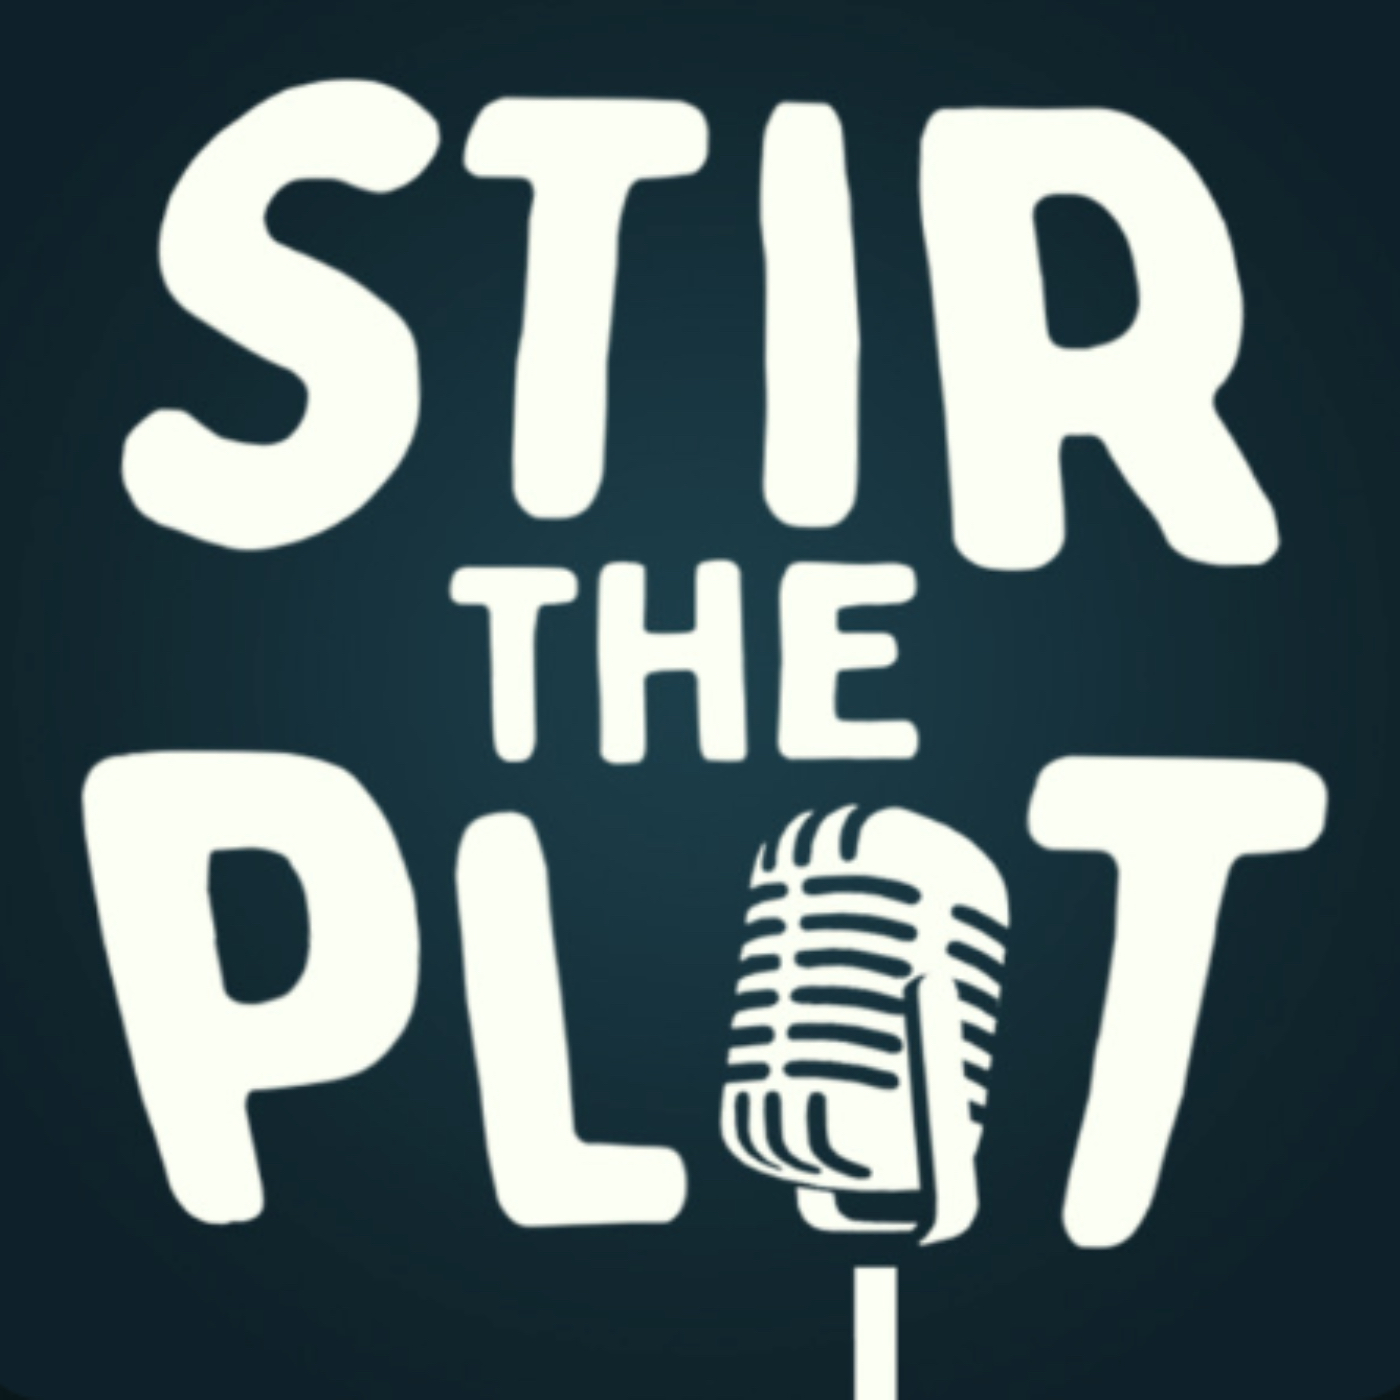 Stir the Plot